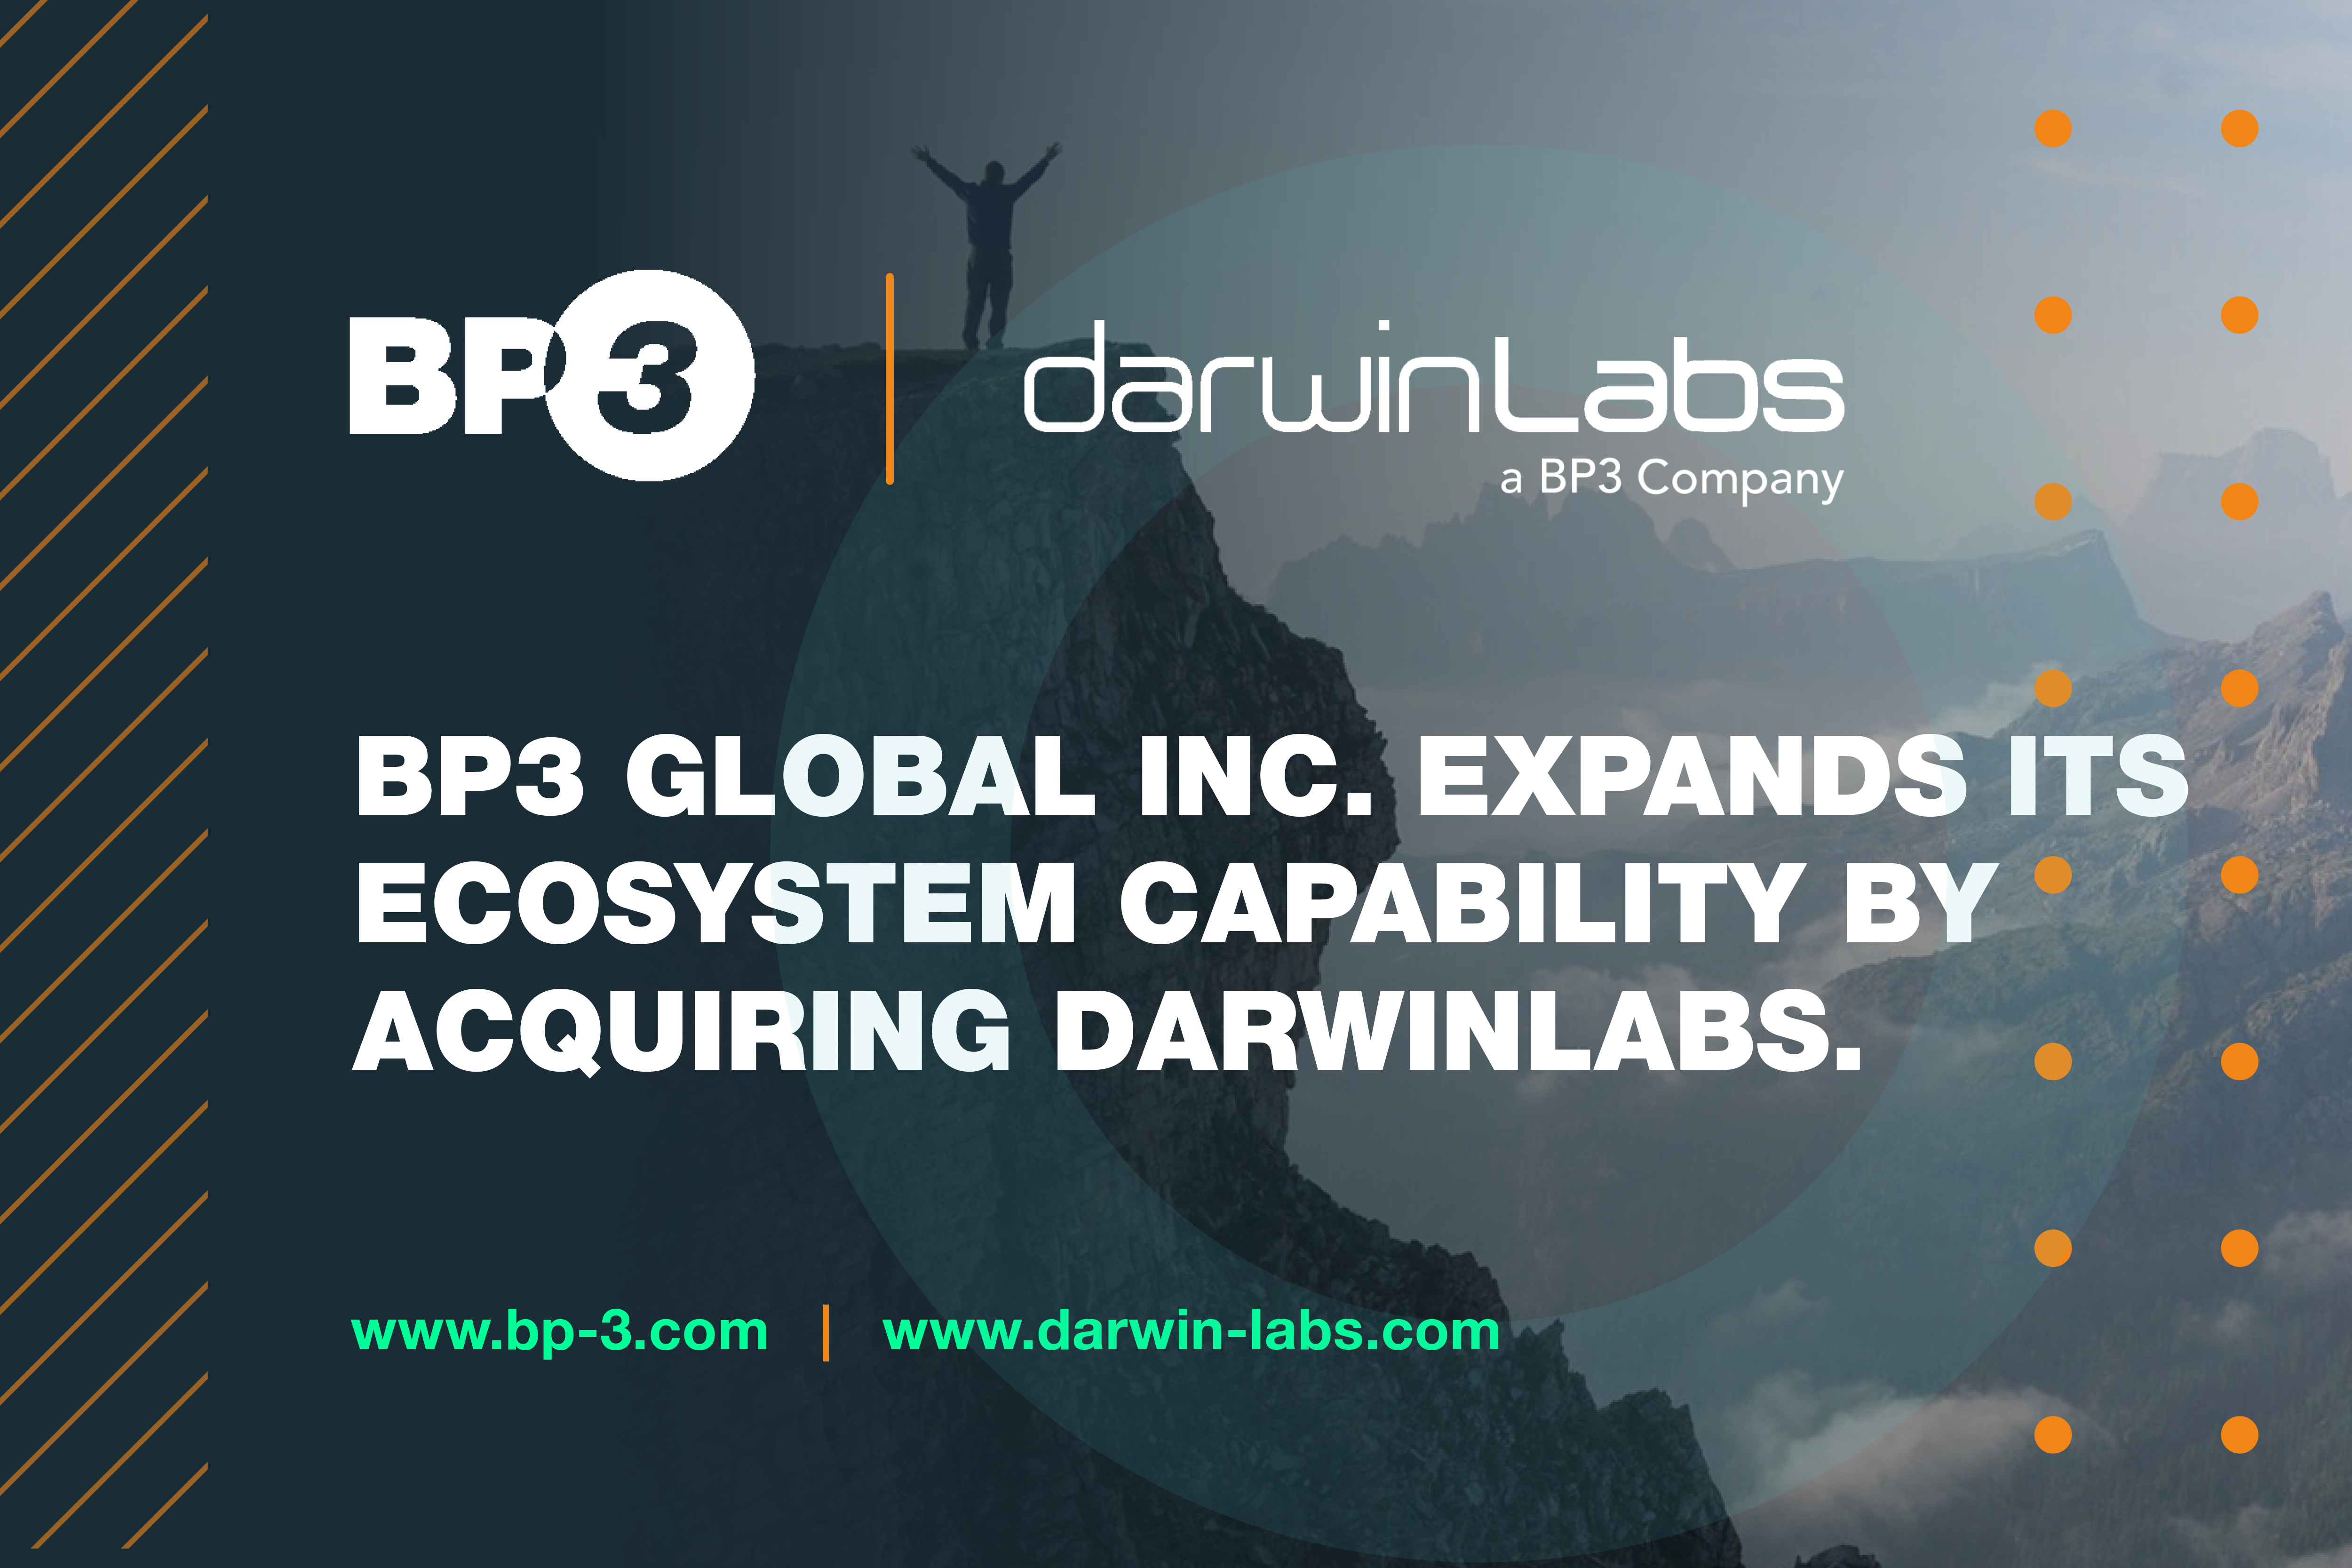 BP3 Global Inc. and darwinLabs